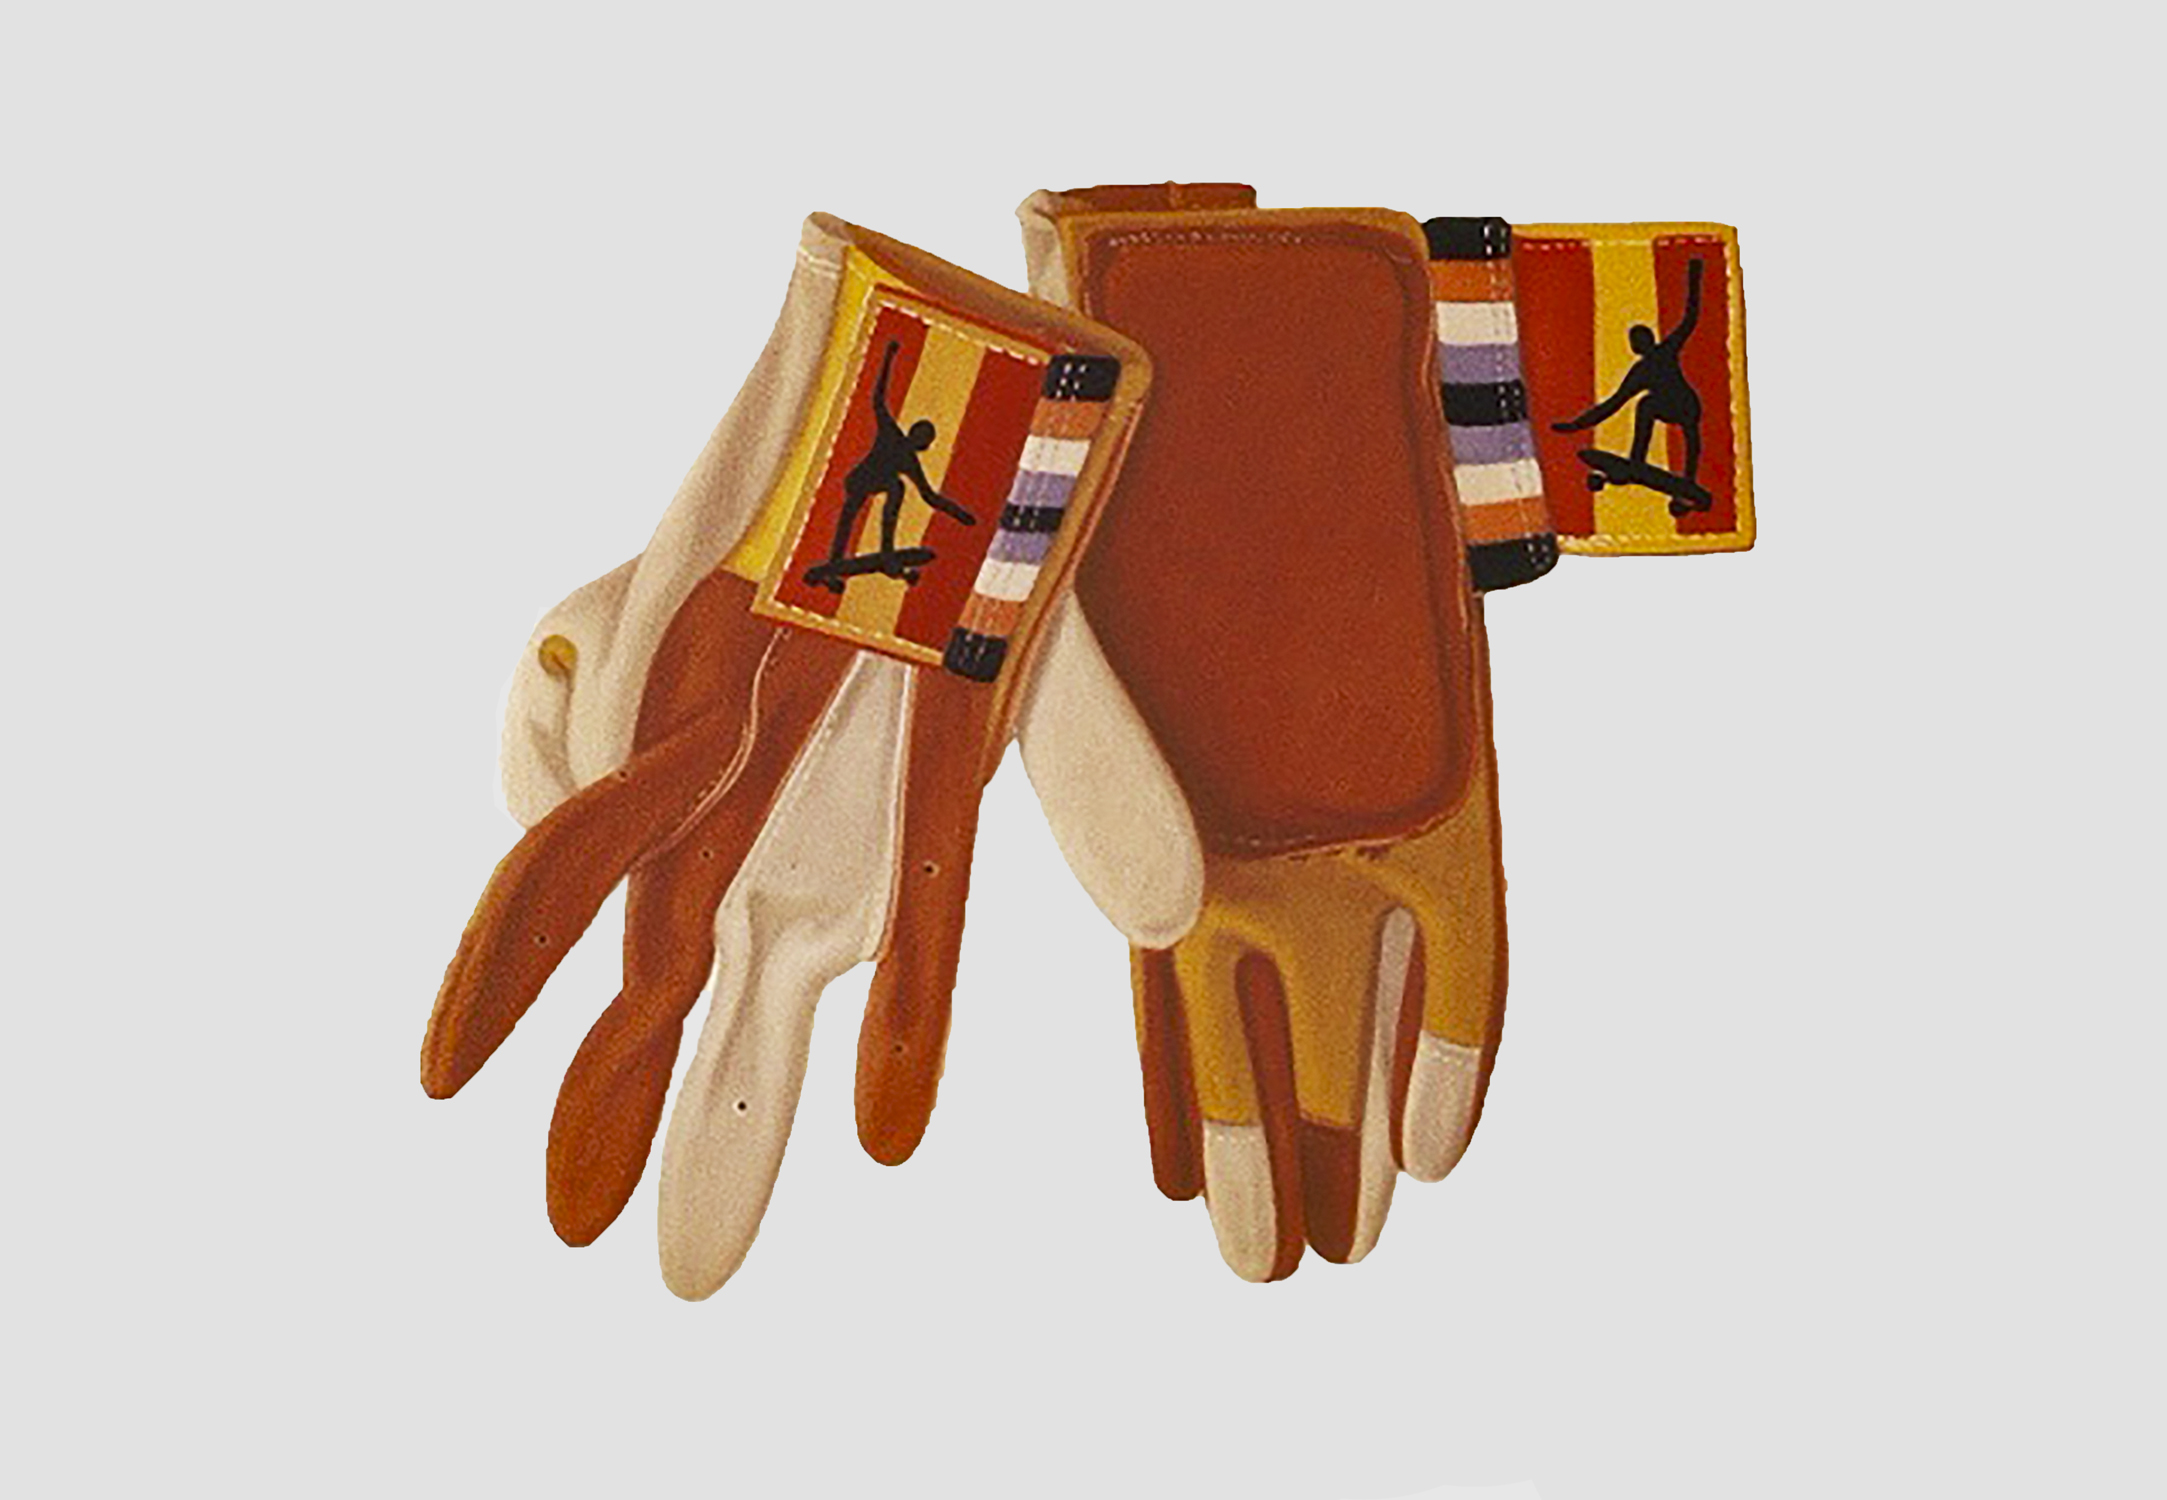  Skateboard Gloves, 22 x 26”, 1979 